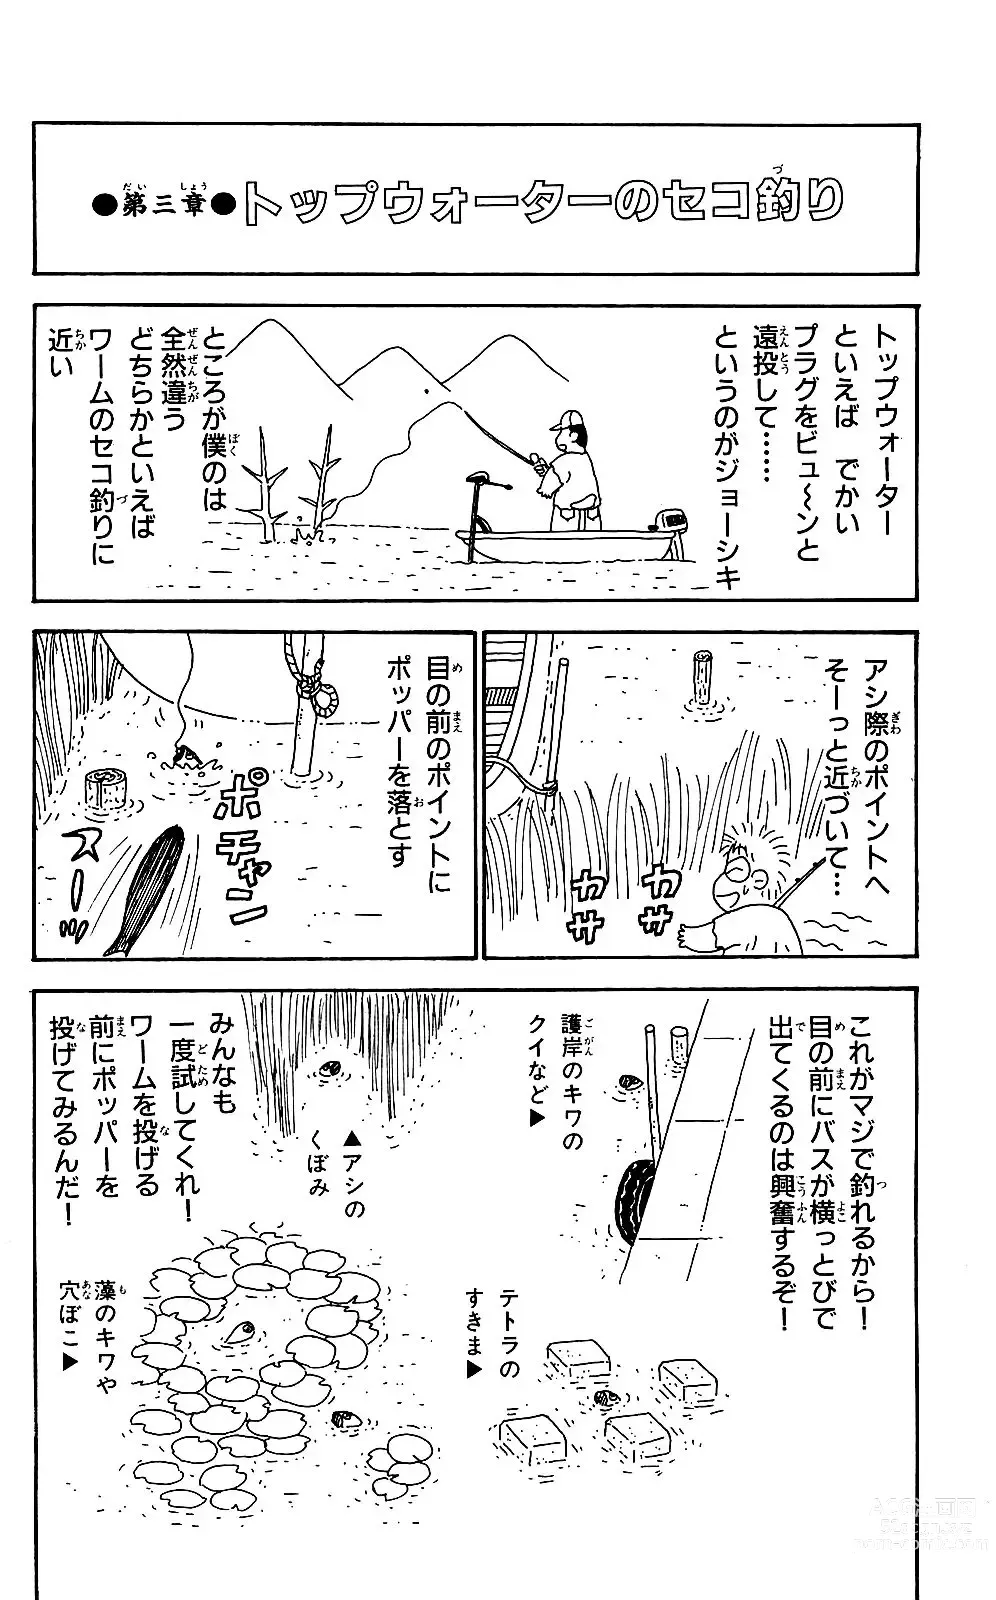 Page 196 of manga Orette Piyoritan 05